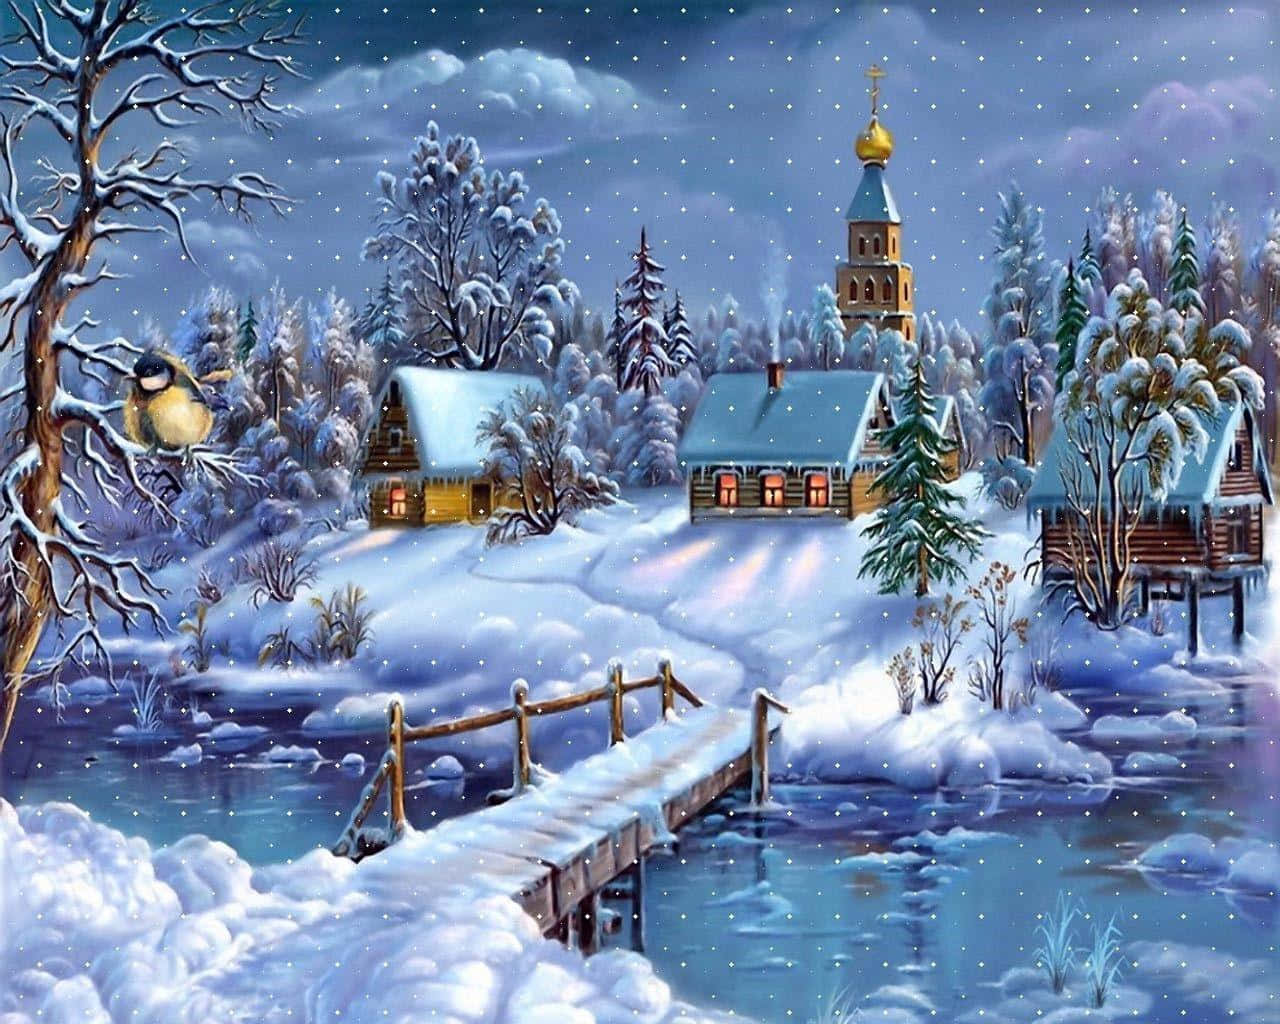 "A beautiful snowfall on a perfect Christmas night"